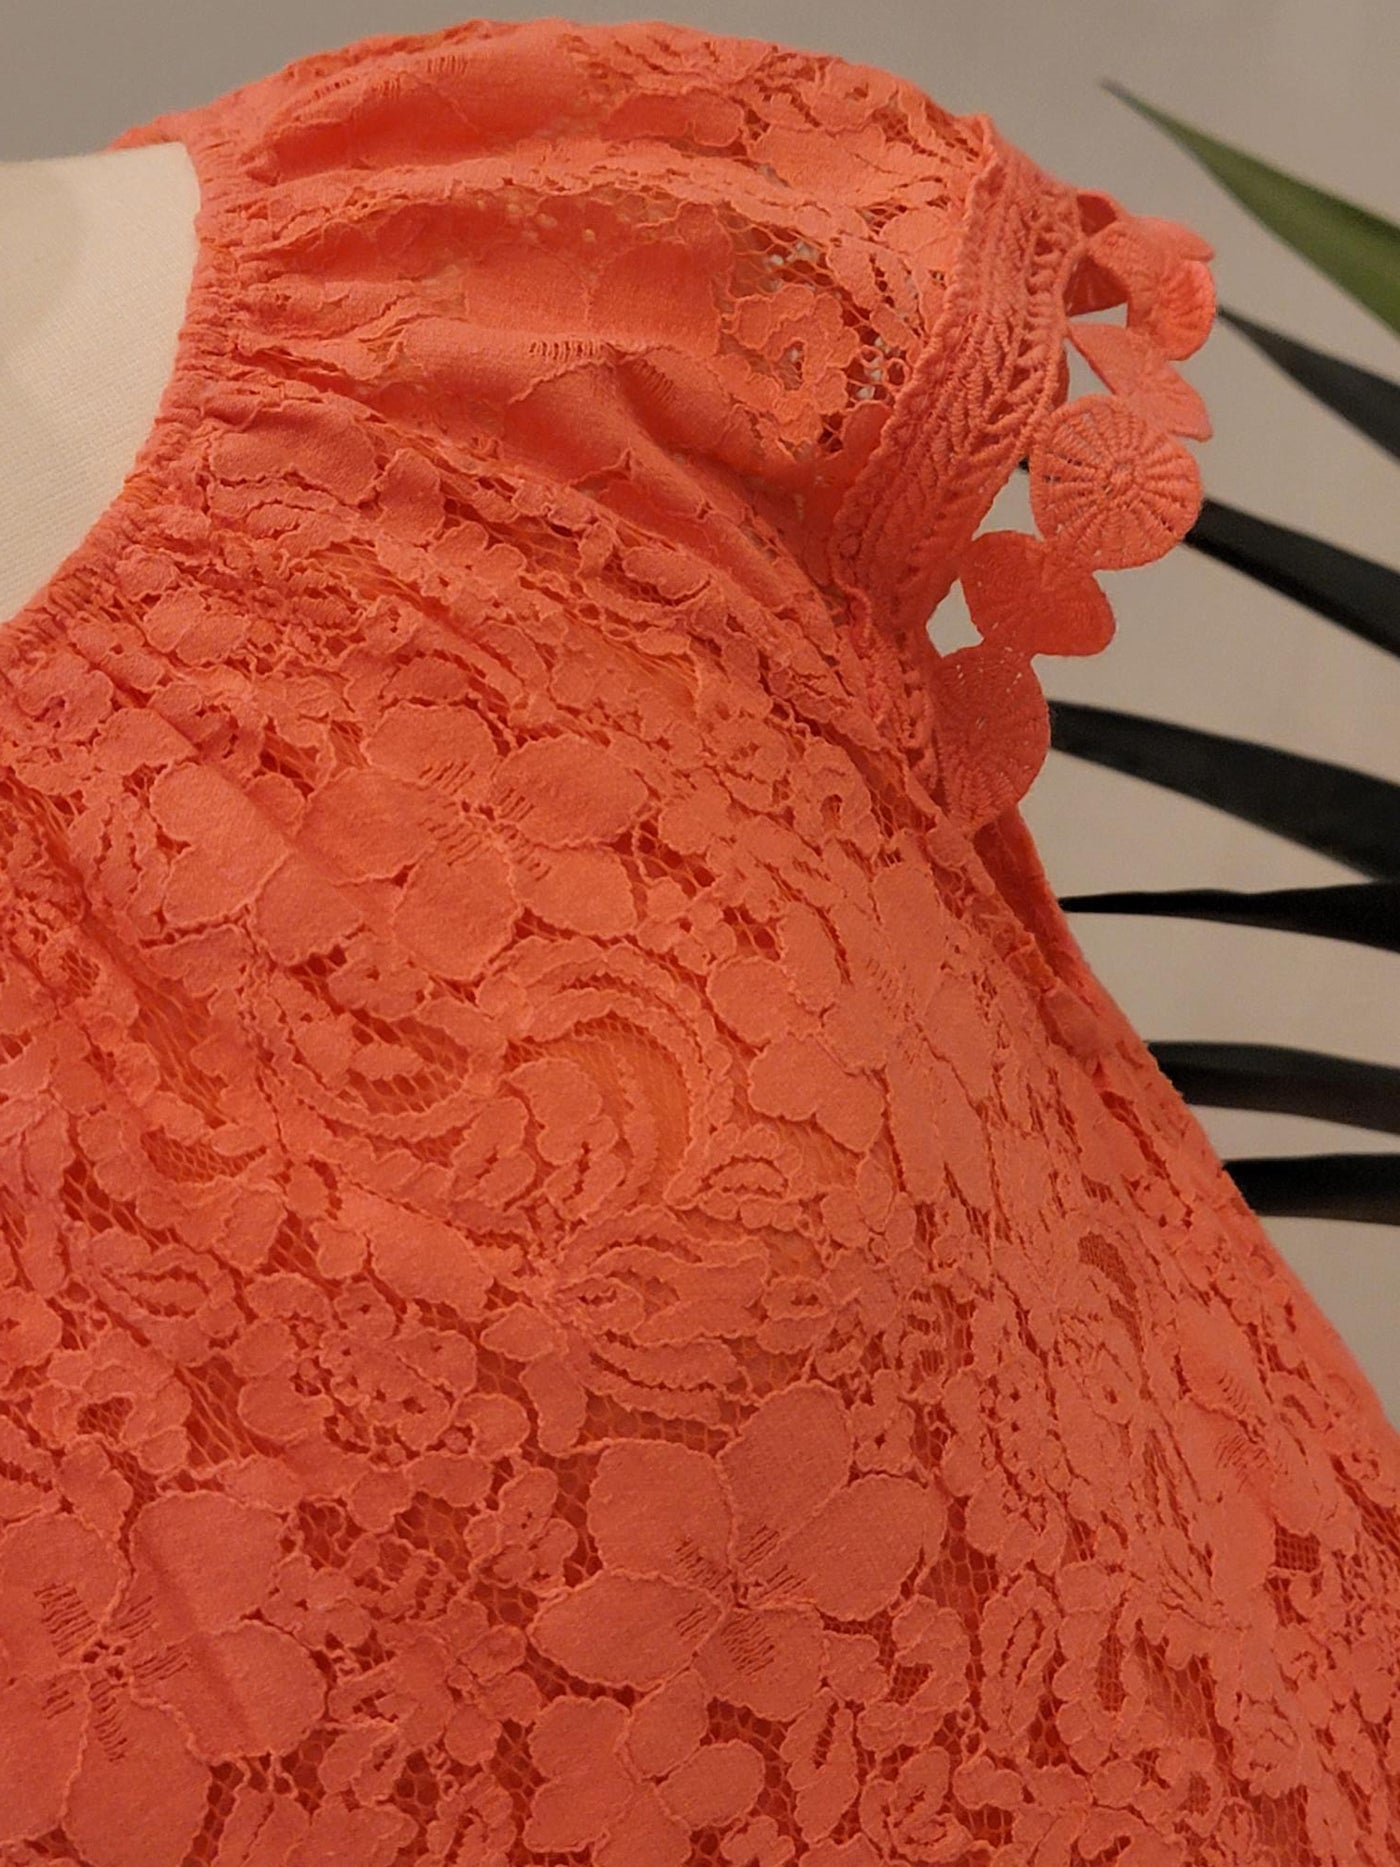 Lace summer dress